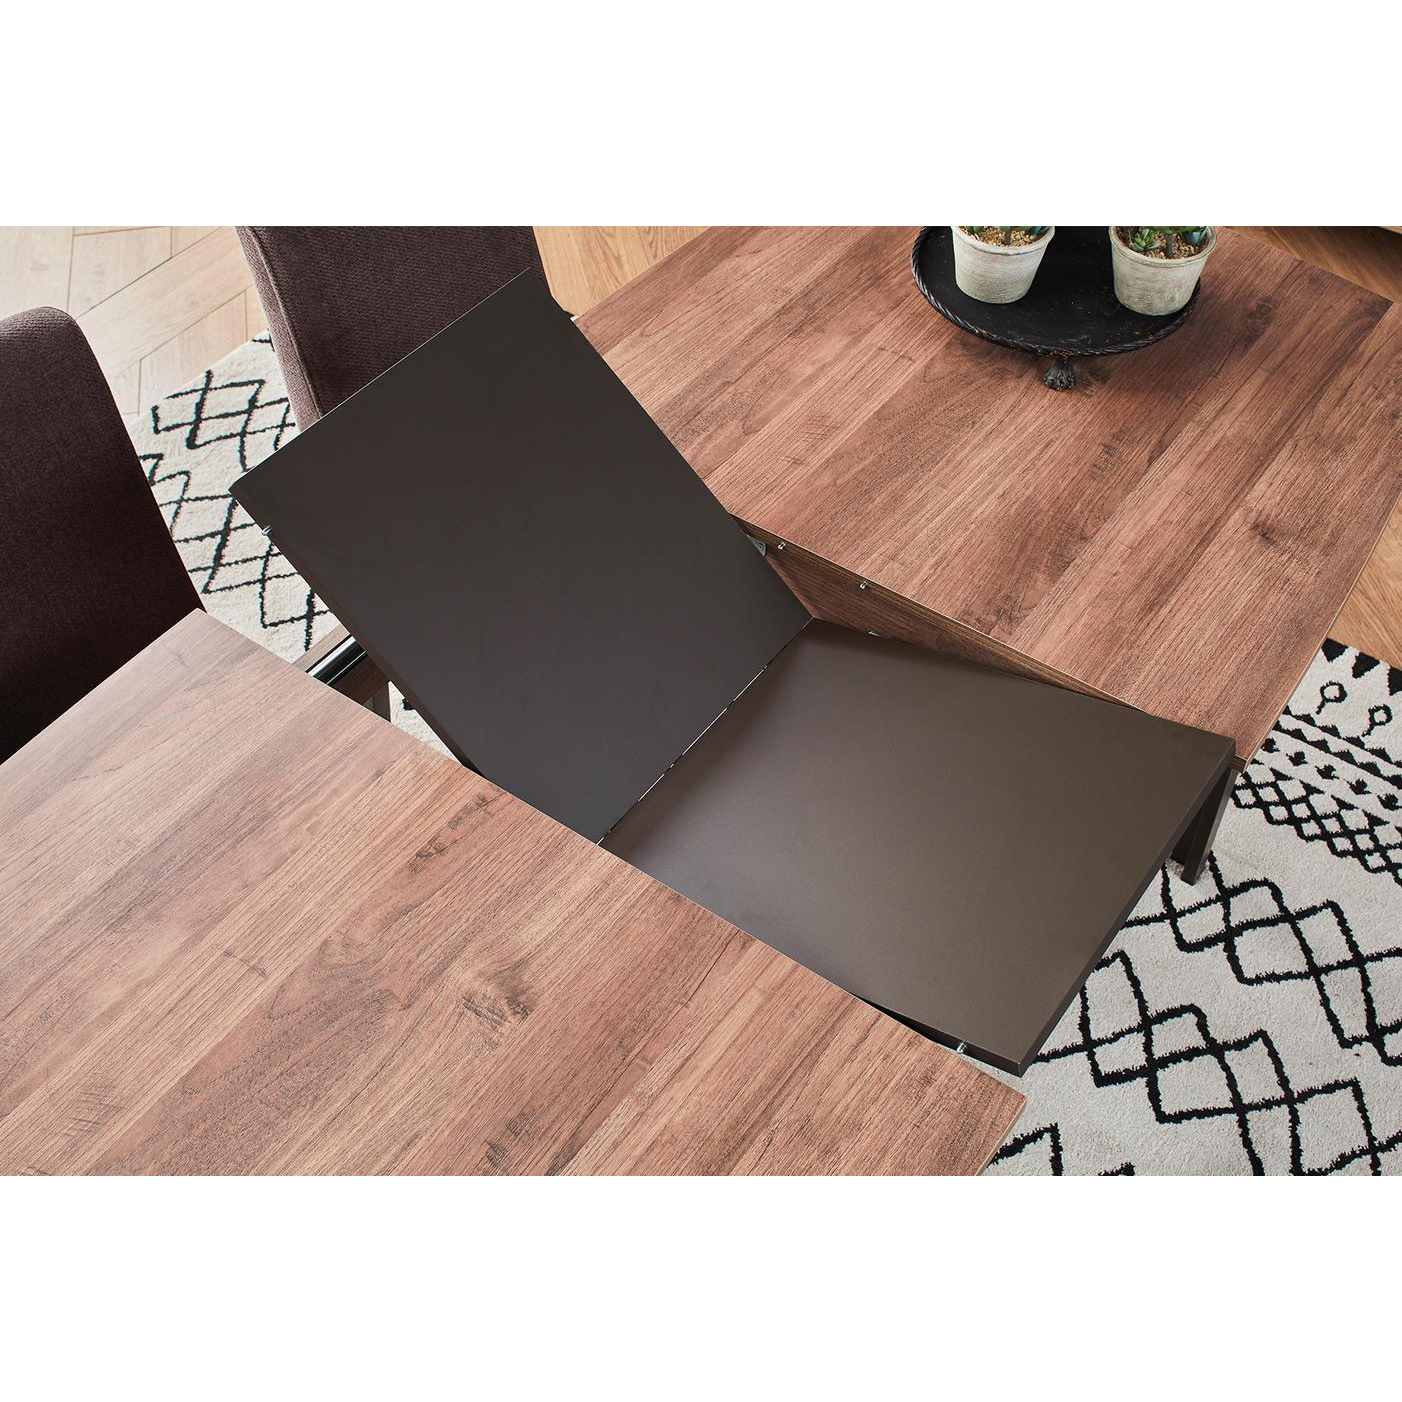 Стол обеденный Enza Home Orlando, раскладной, размер 140(180)х85х76 см (EH51051)EH51051